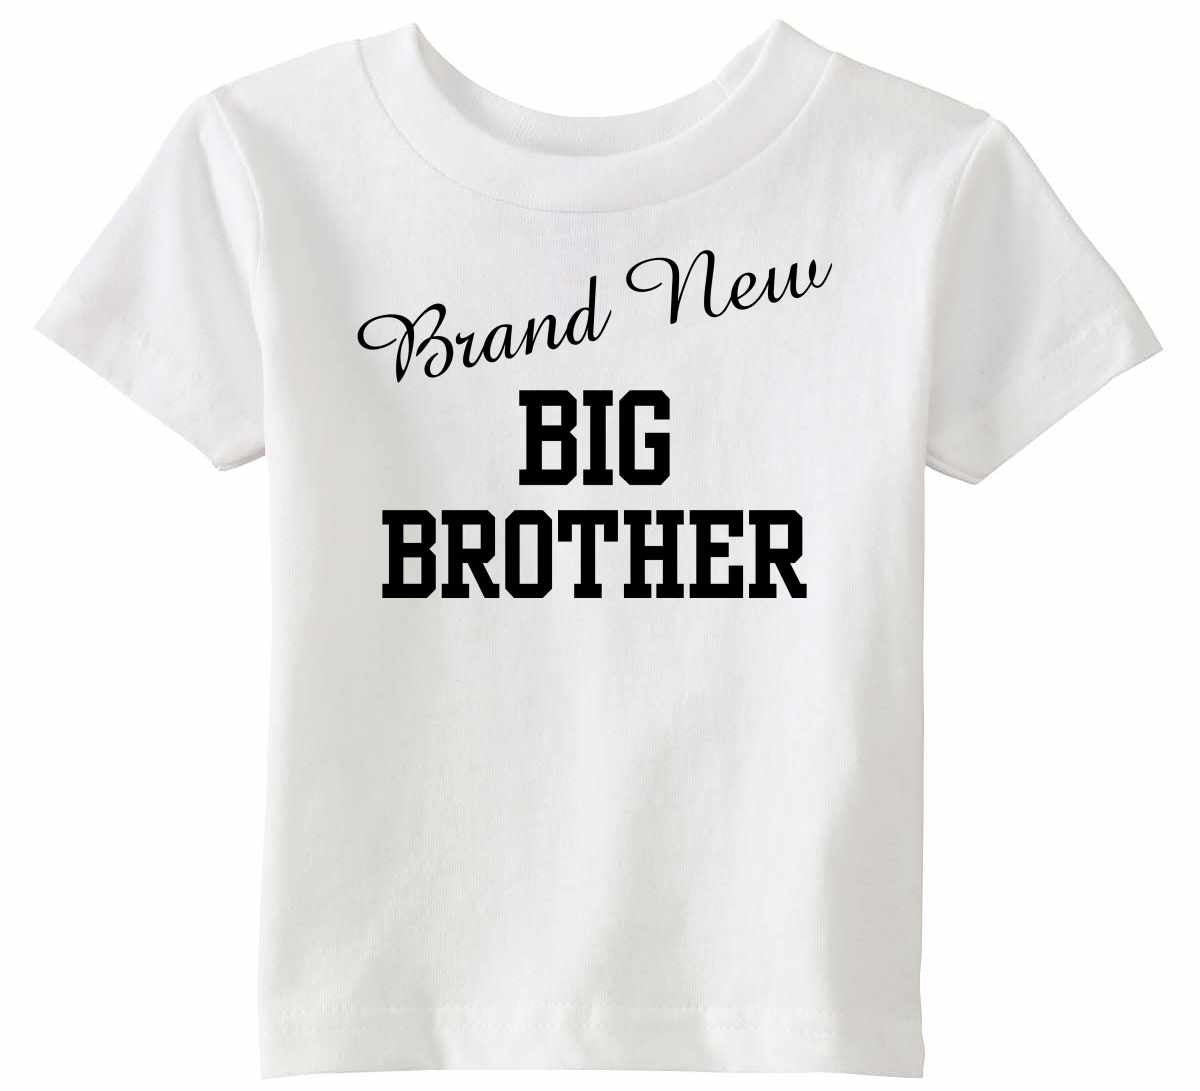 Brand New Big Brother Infant/Toddler  (#999-7)